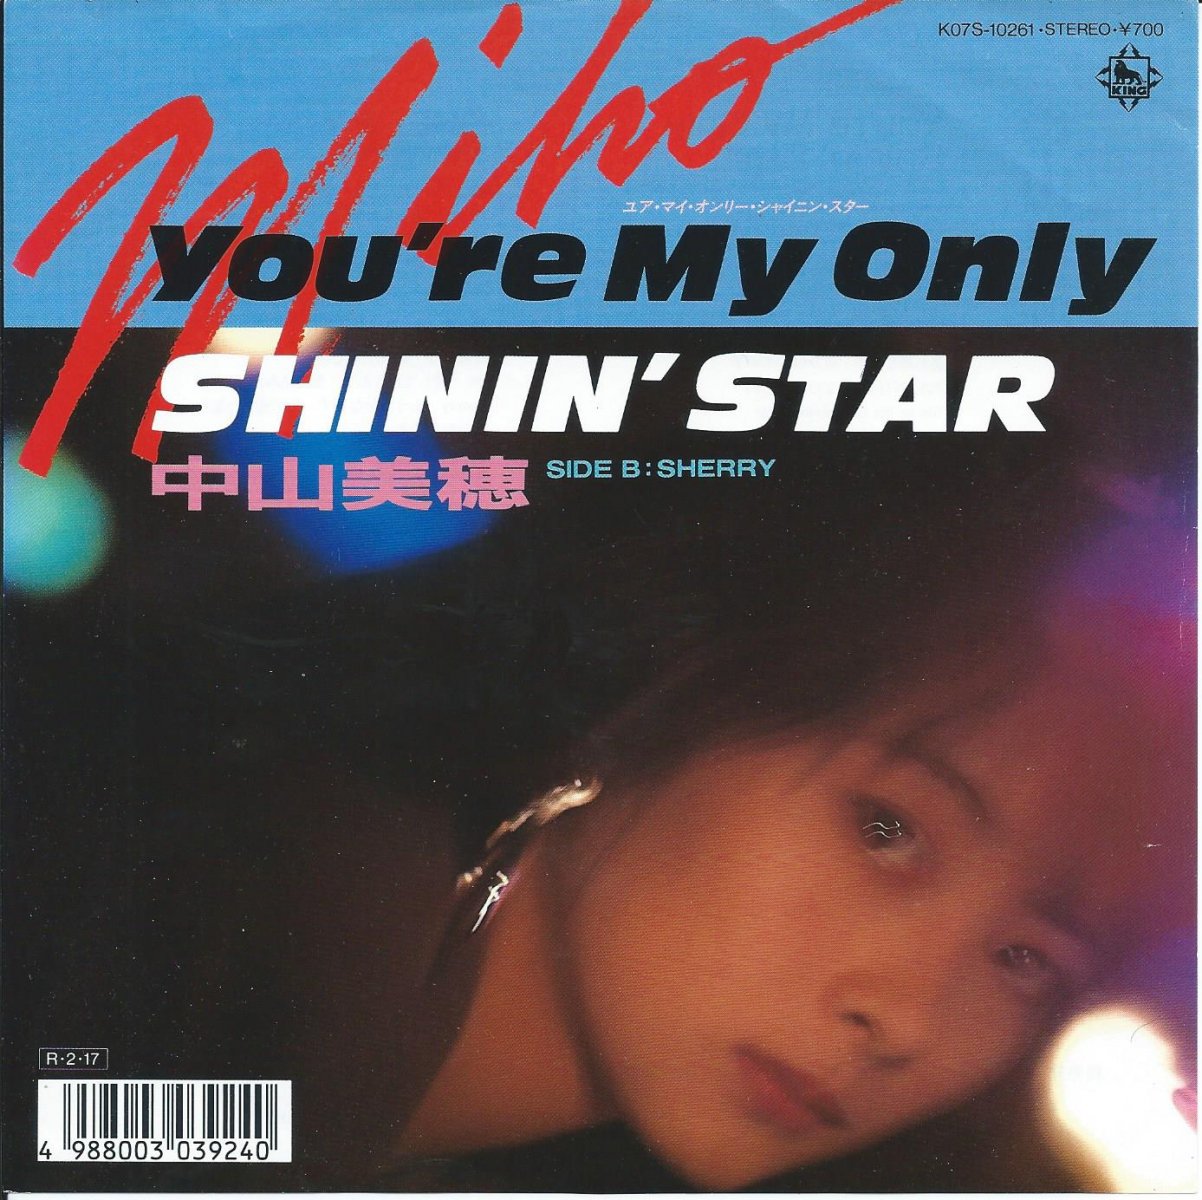 中山美穂 Miho Nakayama 角松敏生 Toshiki Kadomatsu You Re My Only Shinin Star Sherry 7 Hip Tank Records